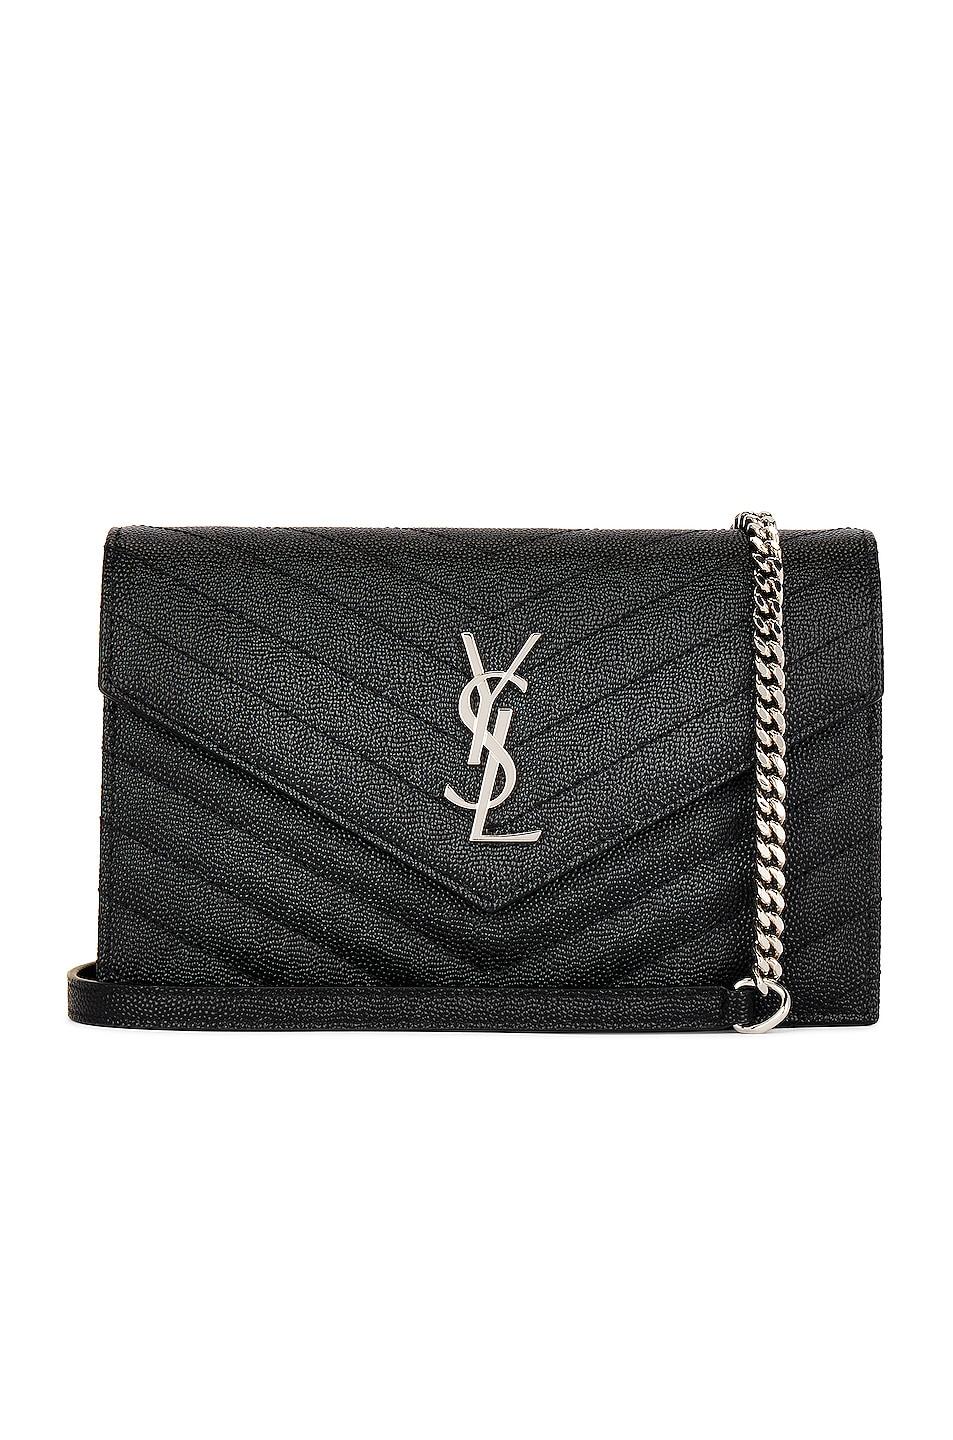 Saint Laurent Cassandra Envelope Chain Wallet Bag in Black | Lyst